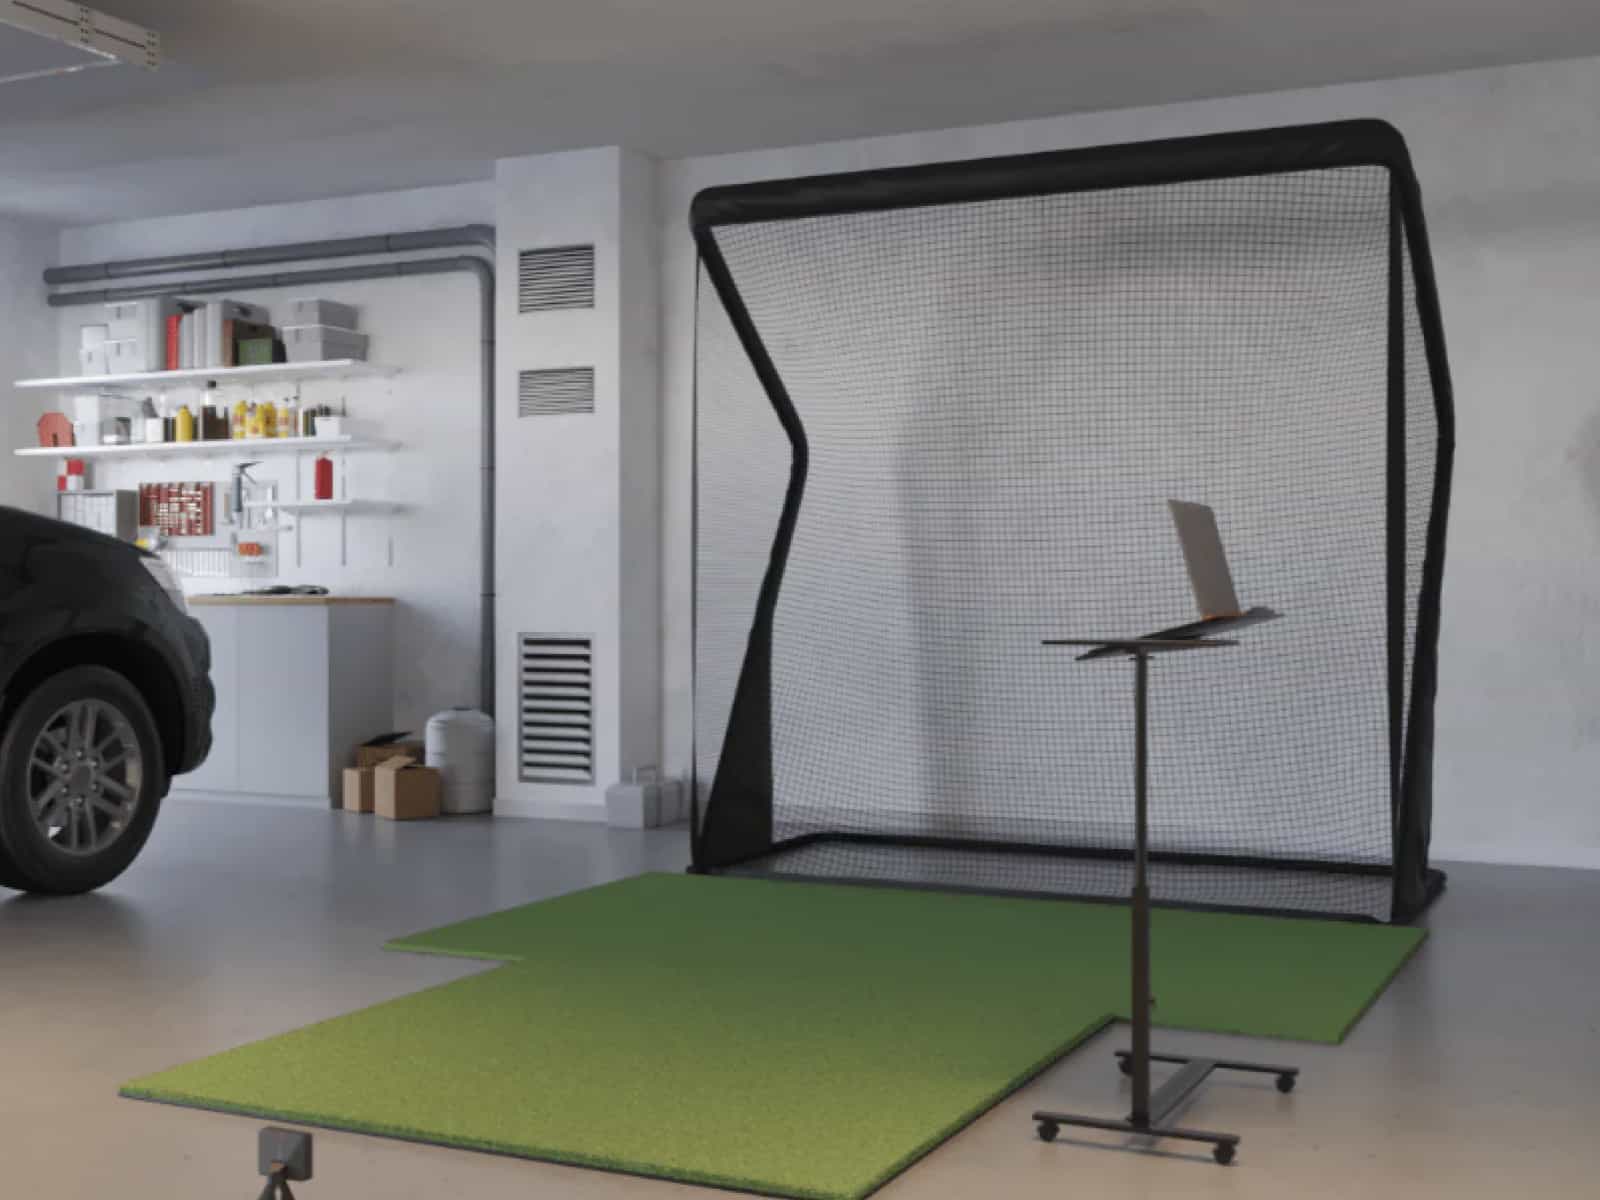 building a golf simulator in garage